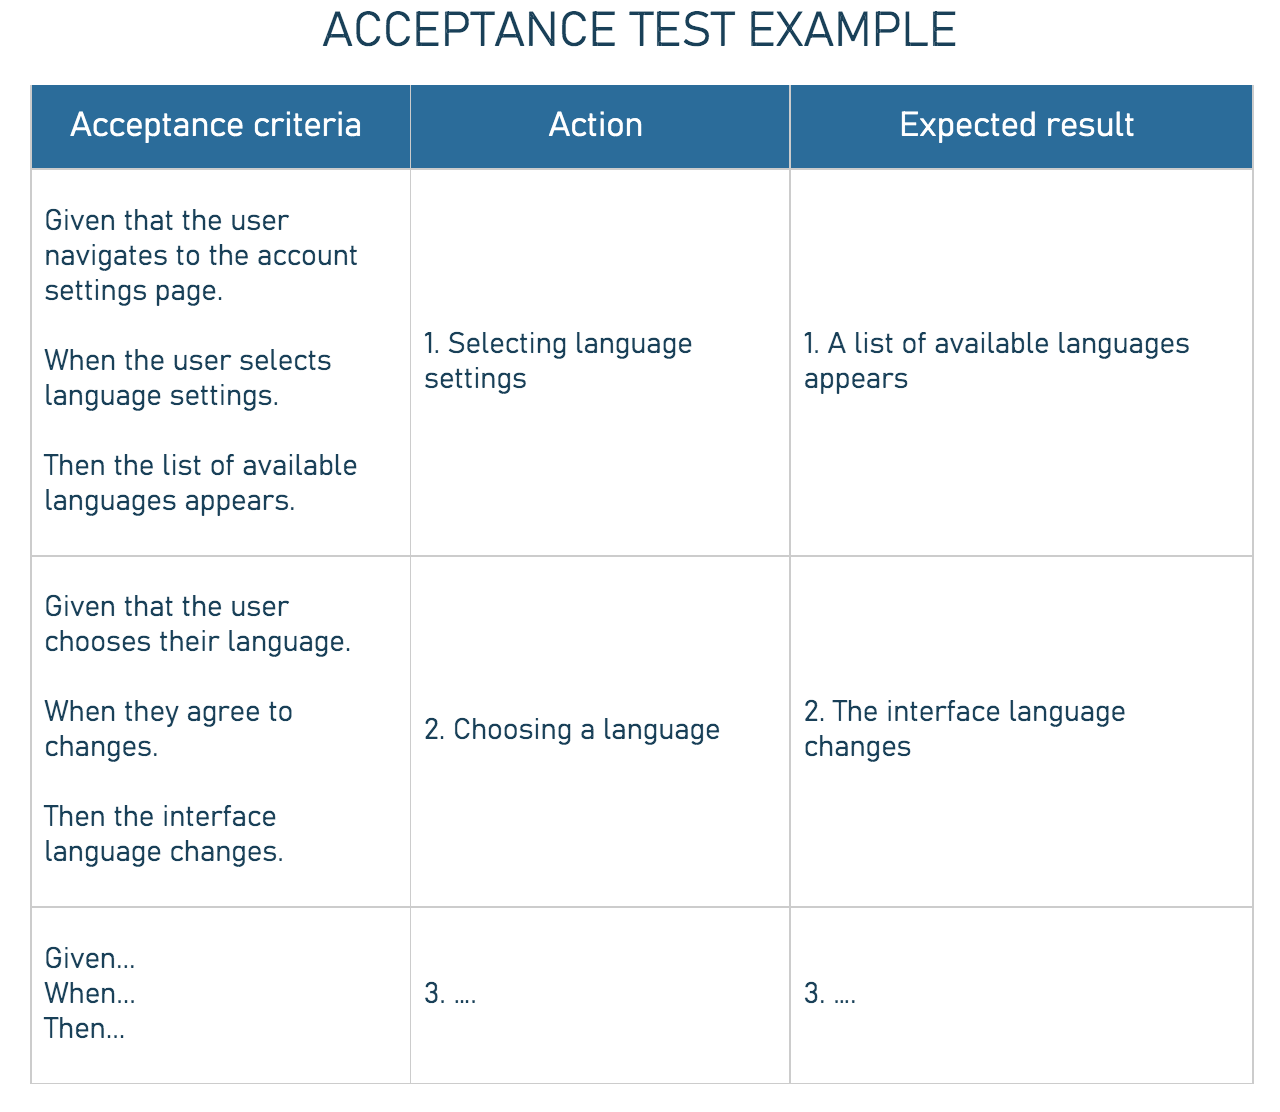 Transforming acceptance criteria into acceptance test cases